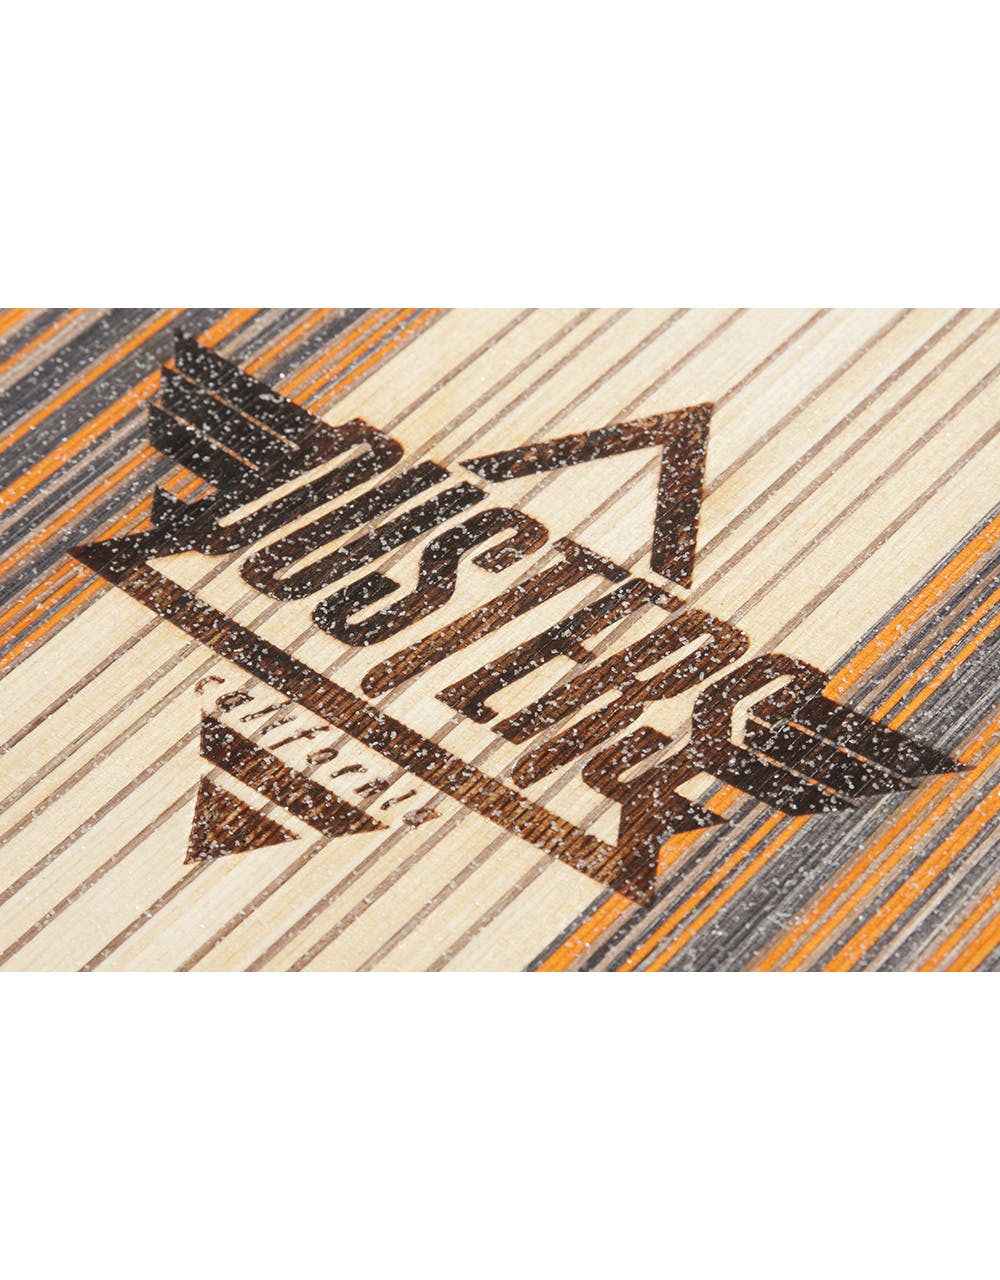 Dusters Flashback Cruiser - 8.5" x 31.125"